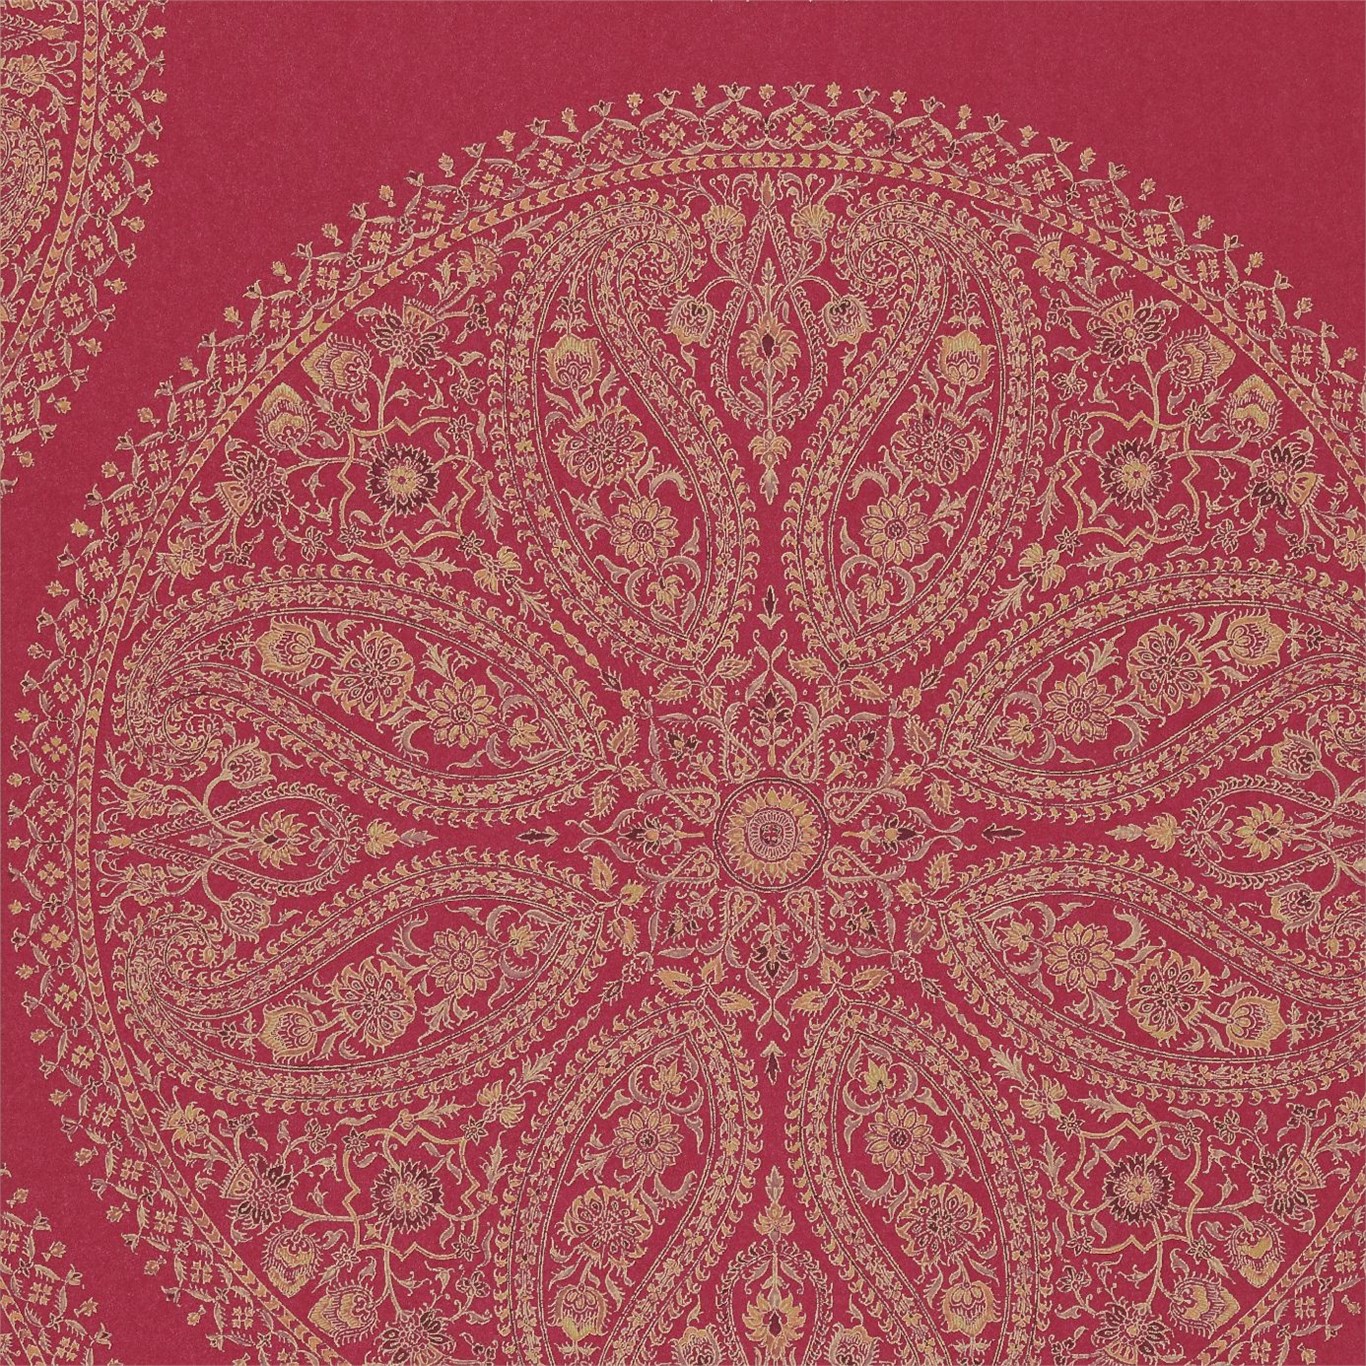 Wallpaper - Sanderson Caverley Wallpapers Paisley Circles Red